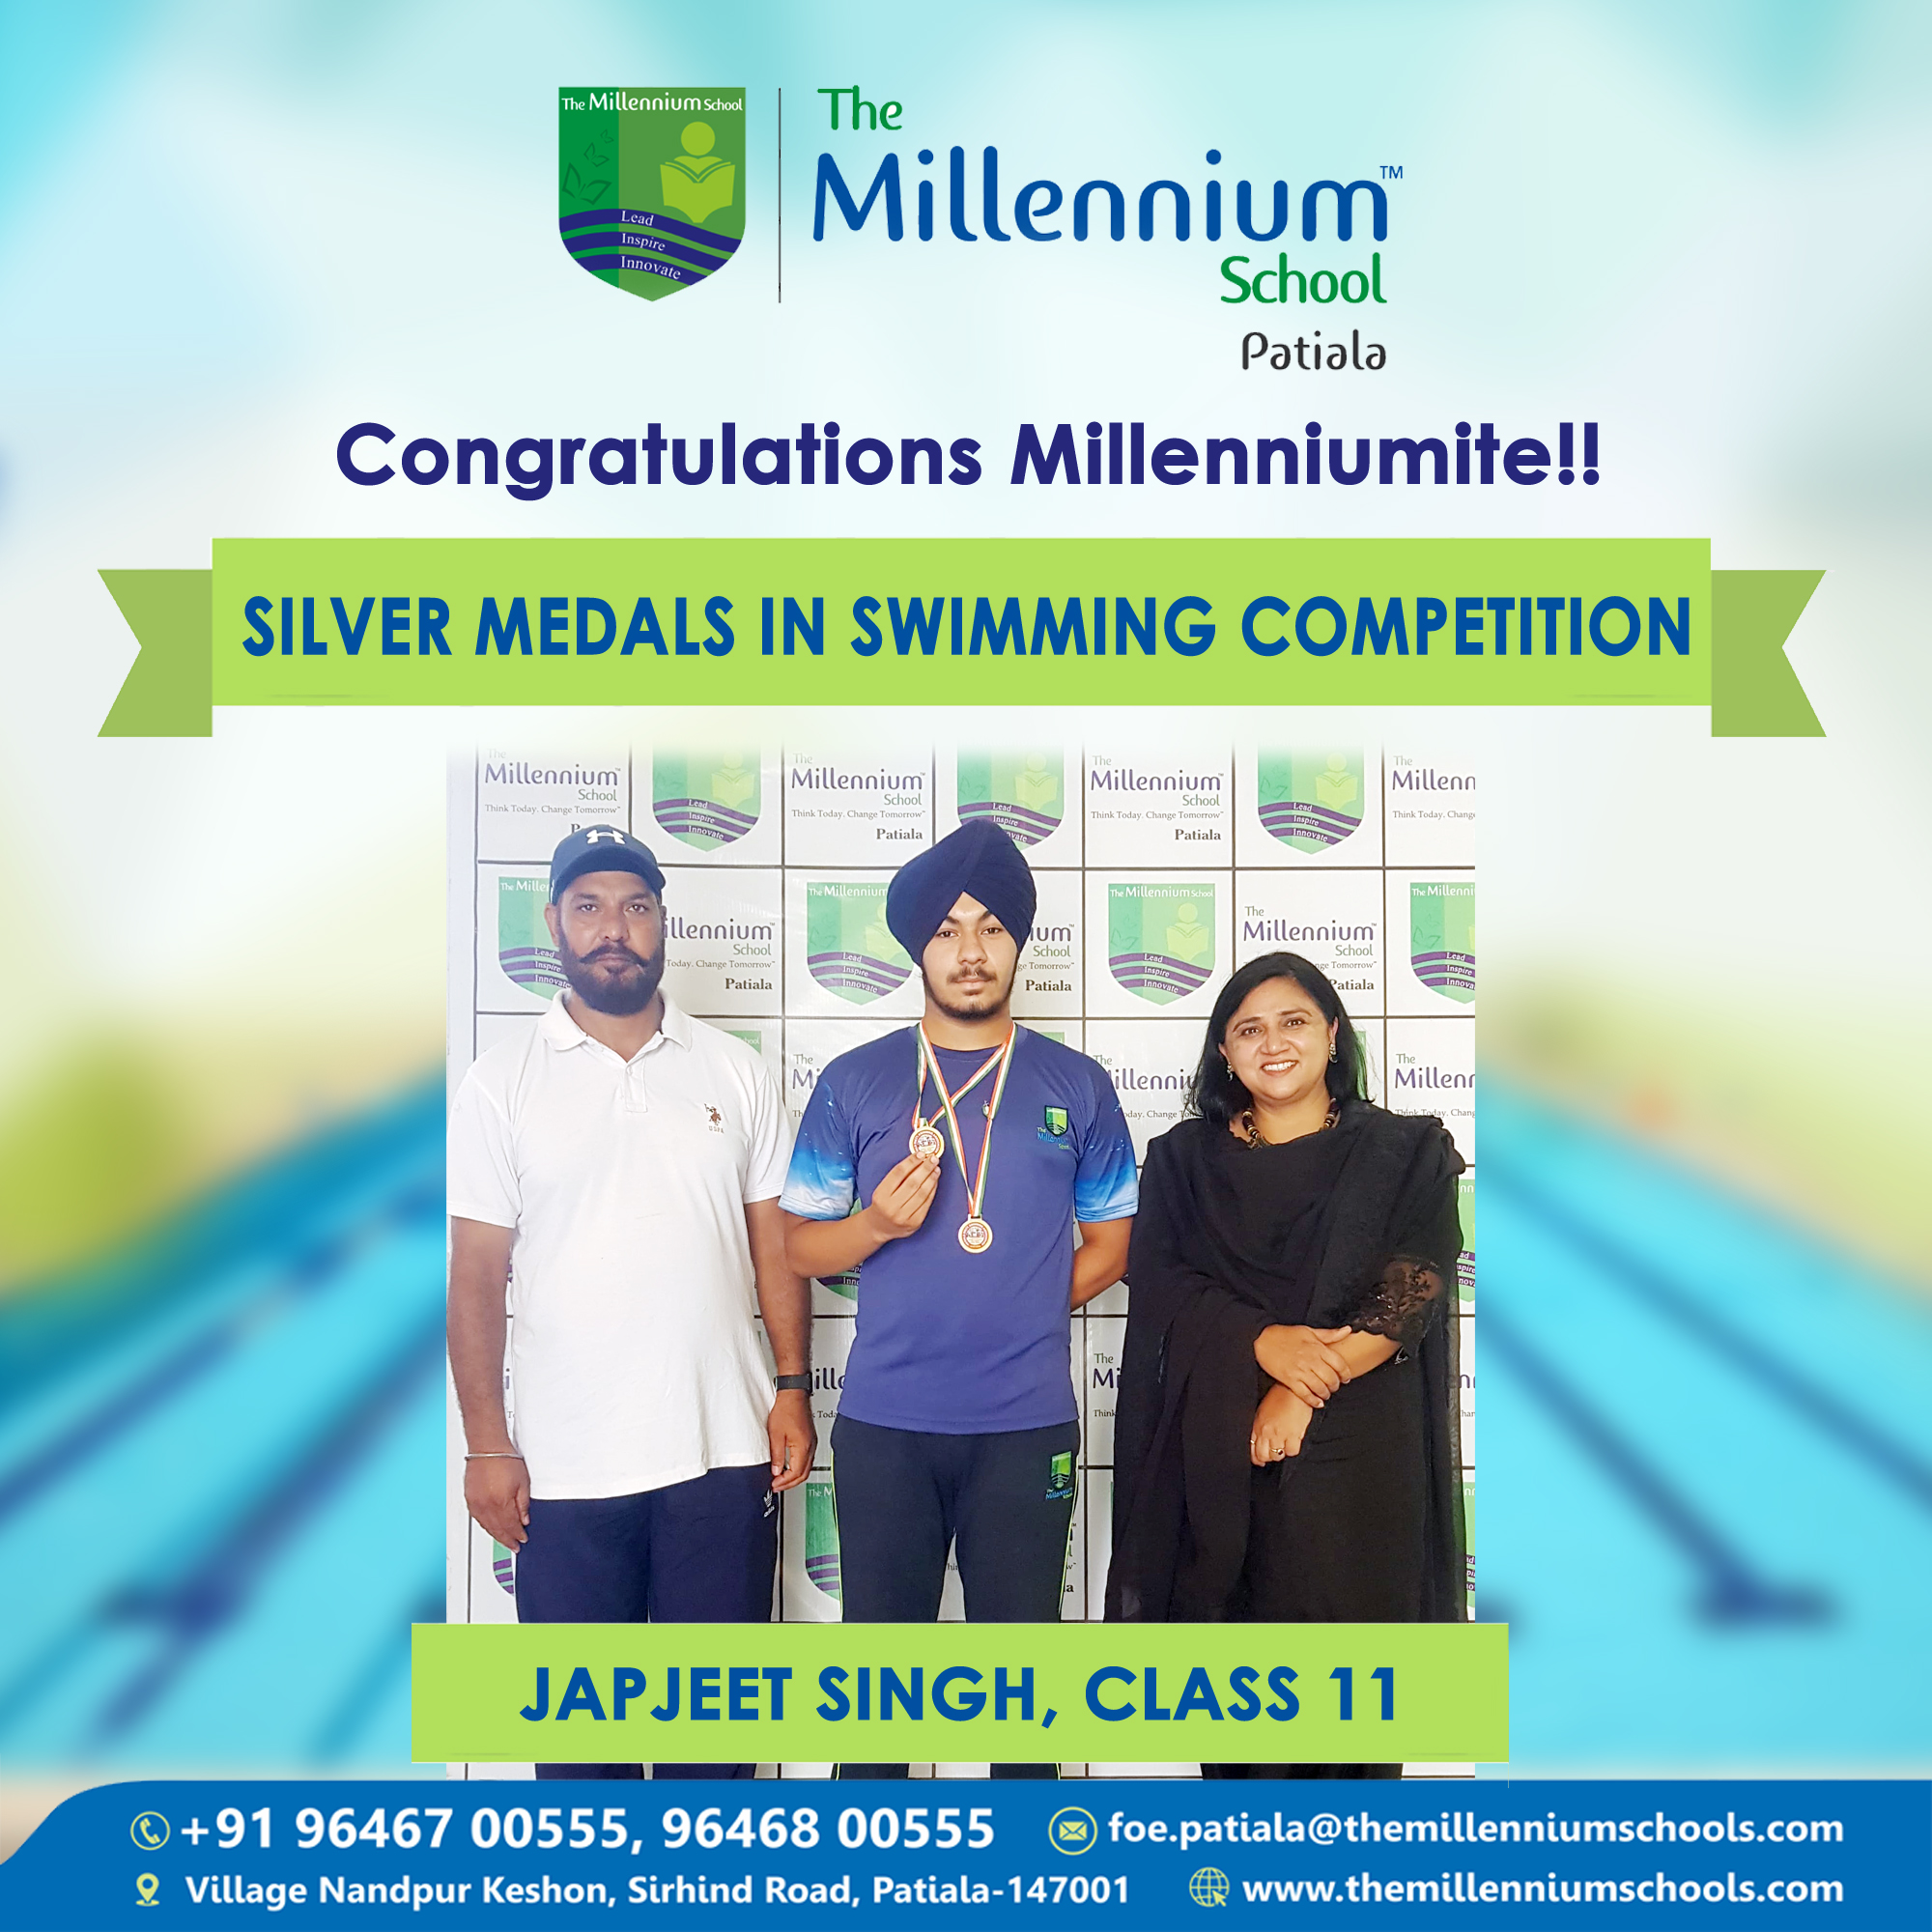 Japjeet Singh of Class 11 wins two Silver Medals